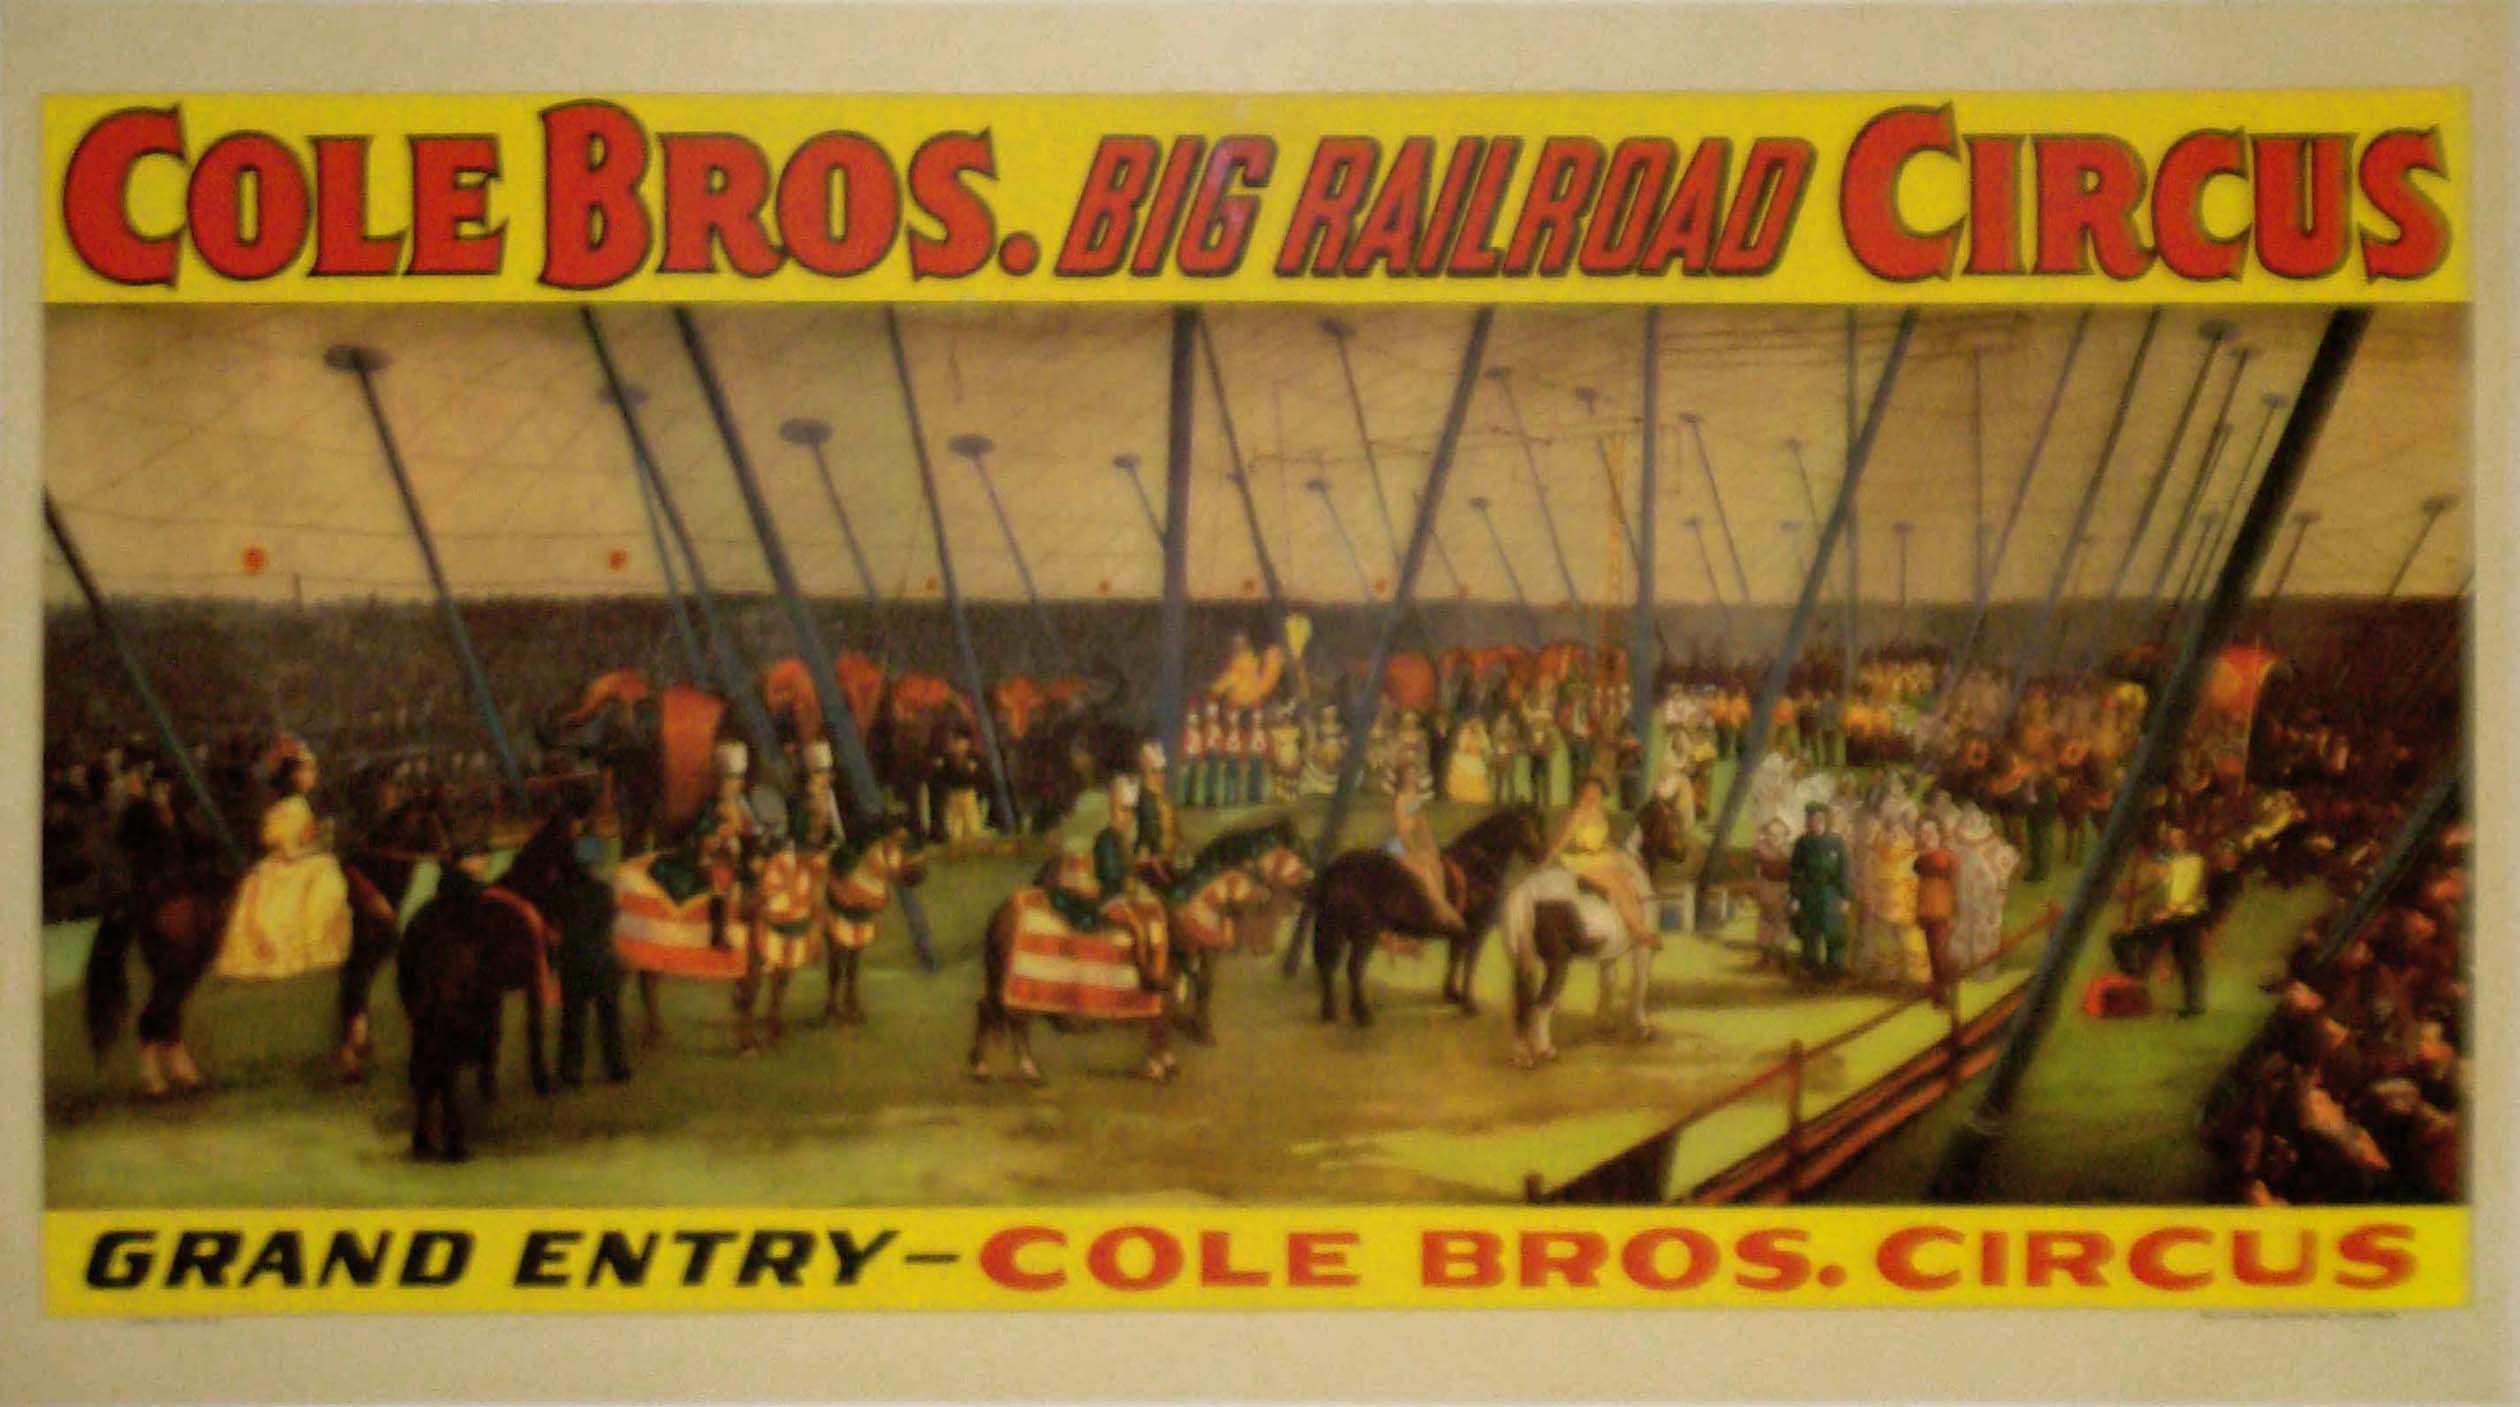 Cole Brothers Big Railroad Circus